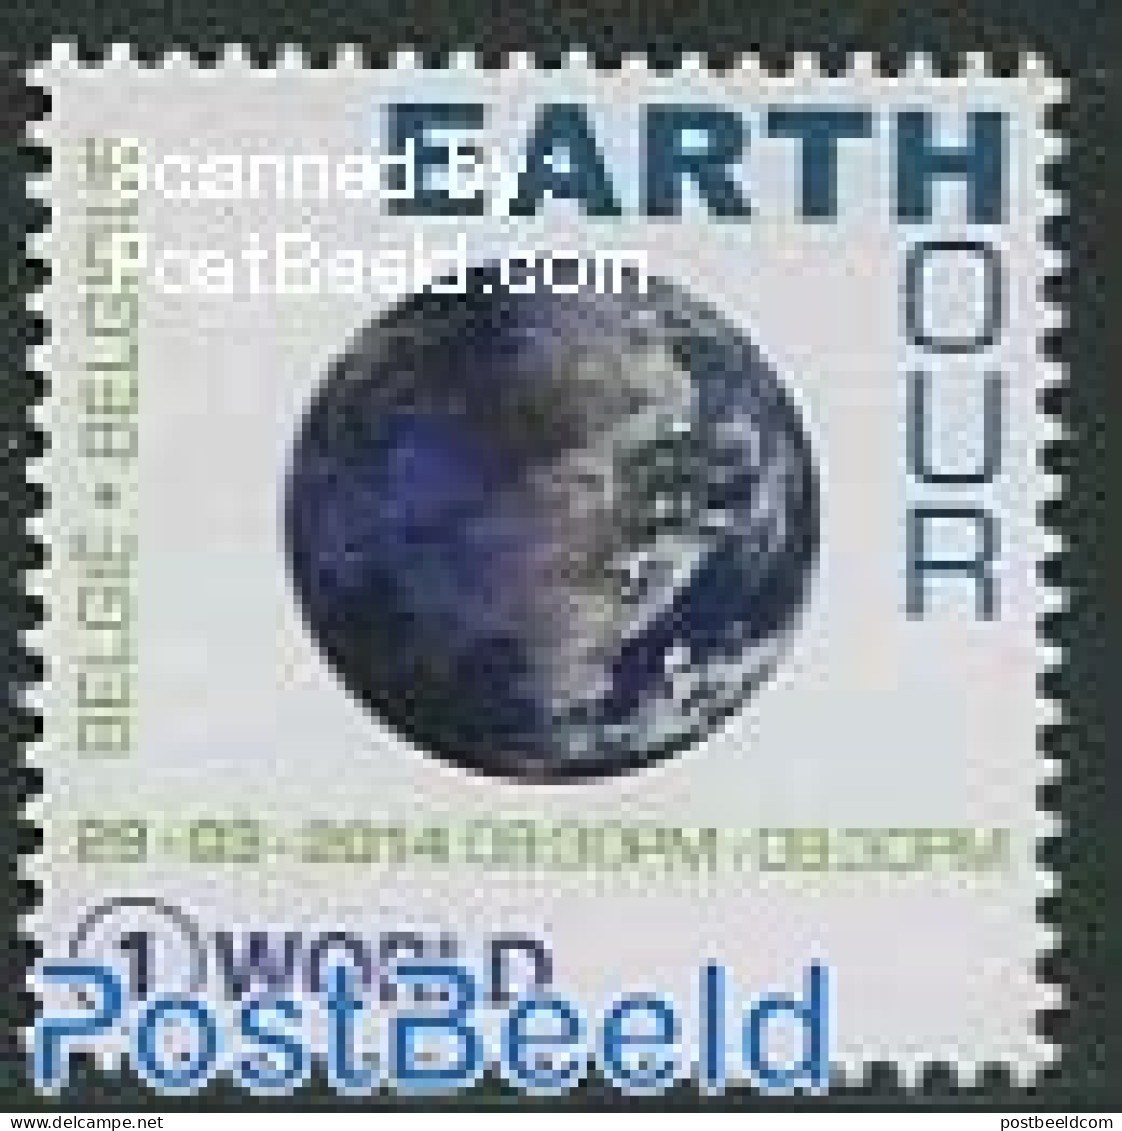 Belgium 2014 Earth Hour 1v, Mint NH, Nature - Various - Environment - Globes - Nuevos